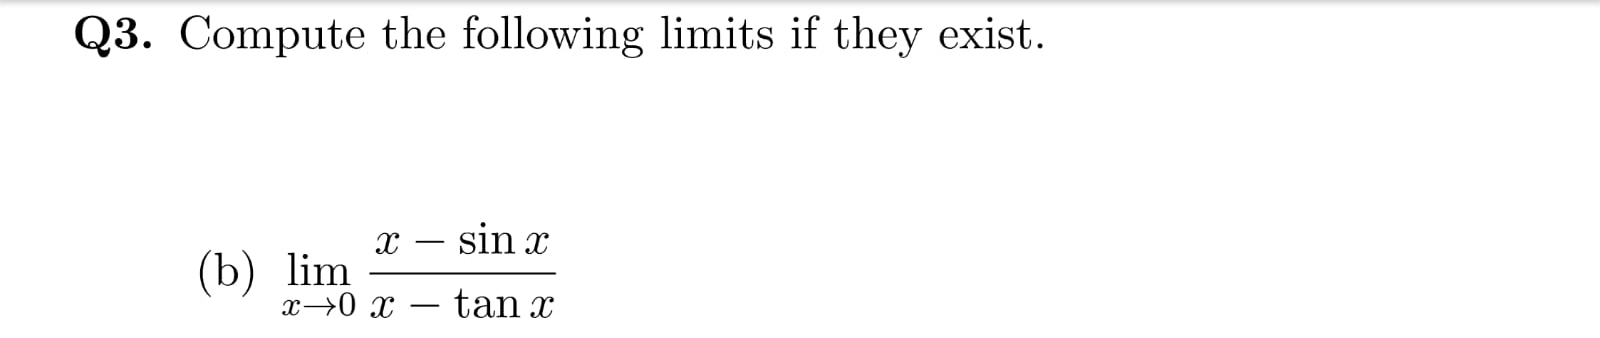 Compute the following limits if they exist.
sin x
-
(b) lim
x→0 x
tan x
|
